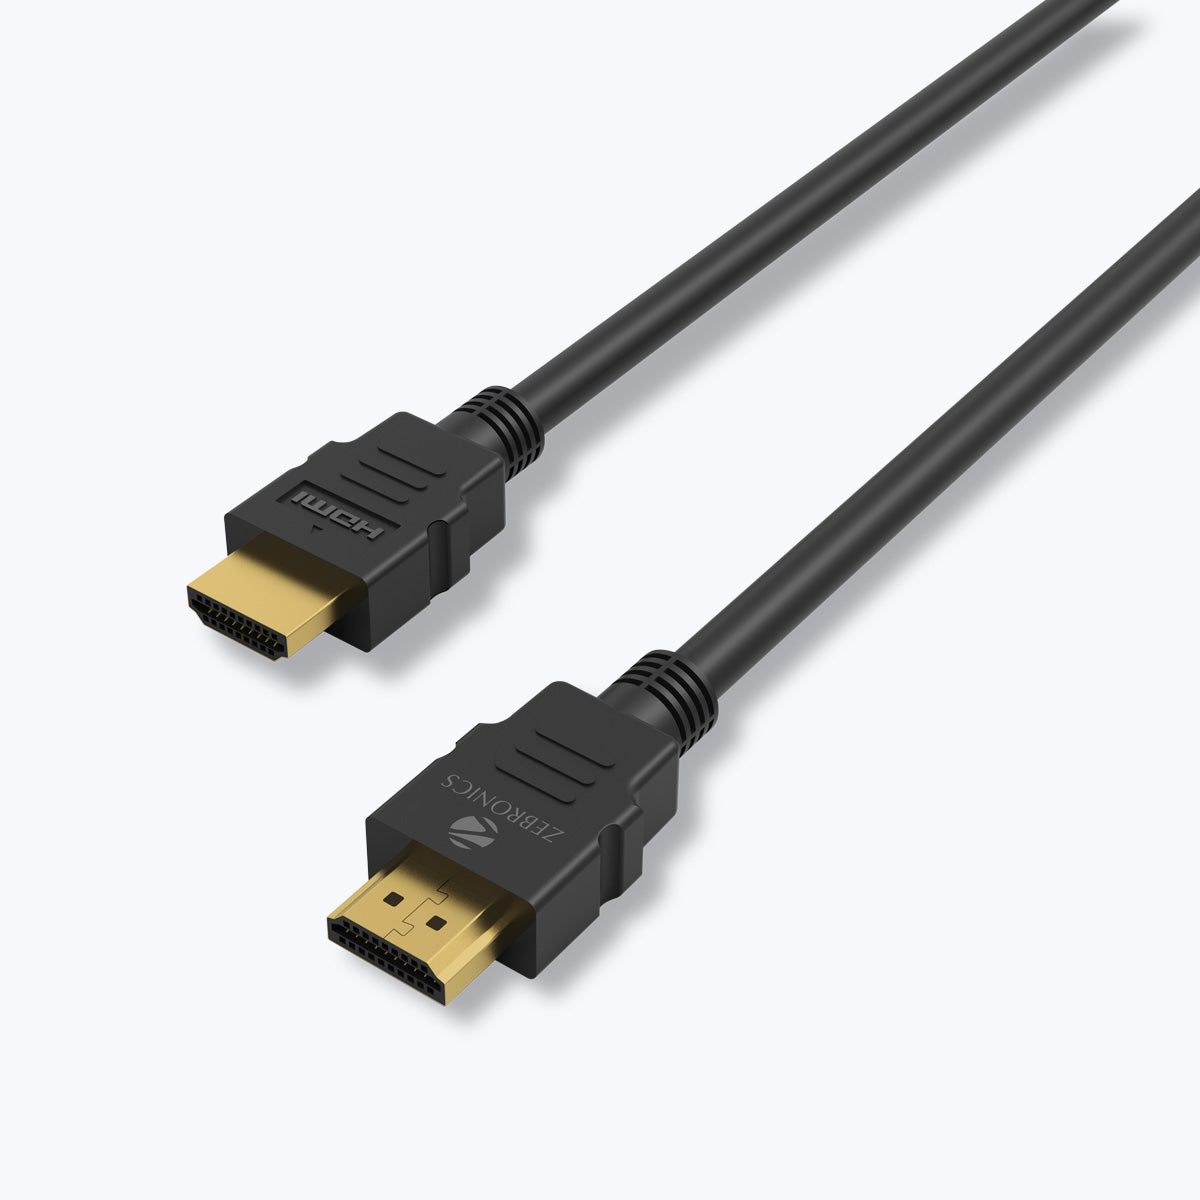 ZEB-HAA1520 (1.5 Meter) - HDMI Cable - Zebronics